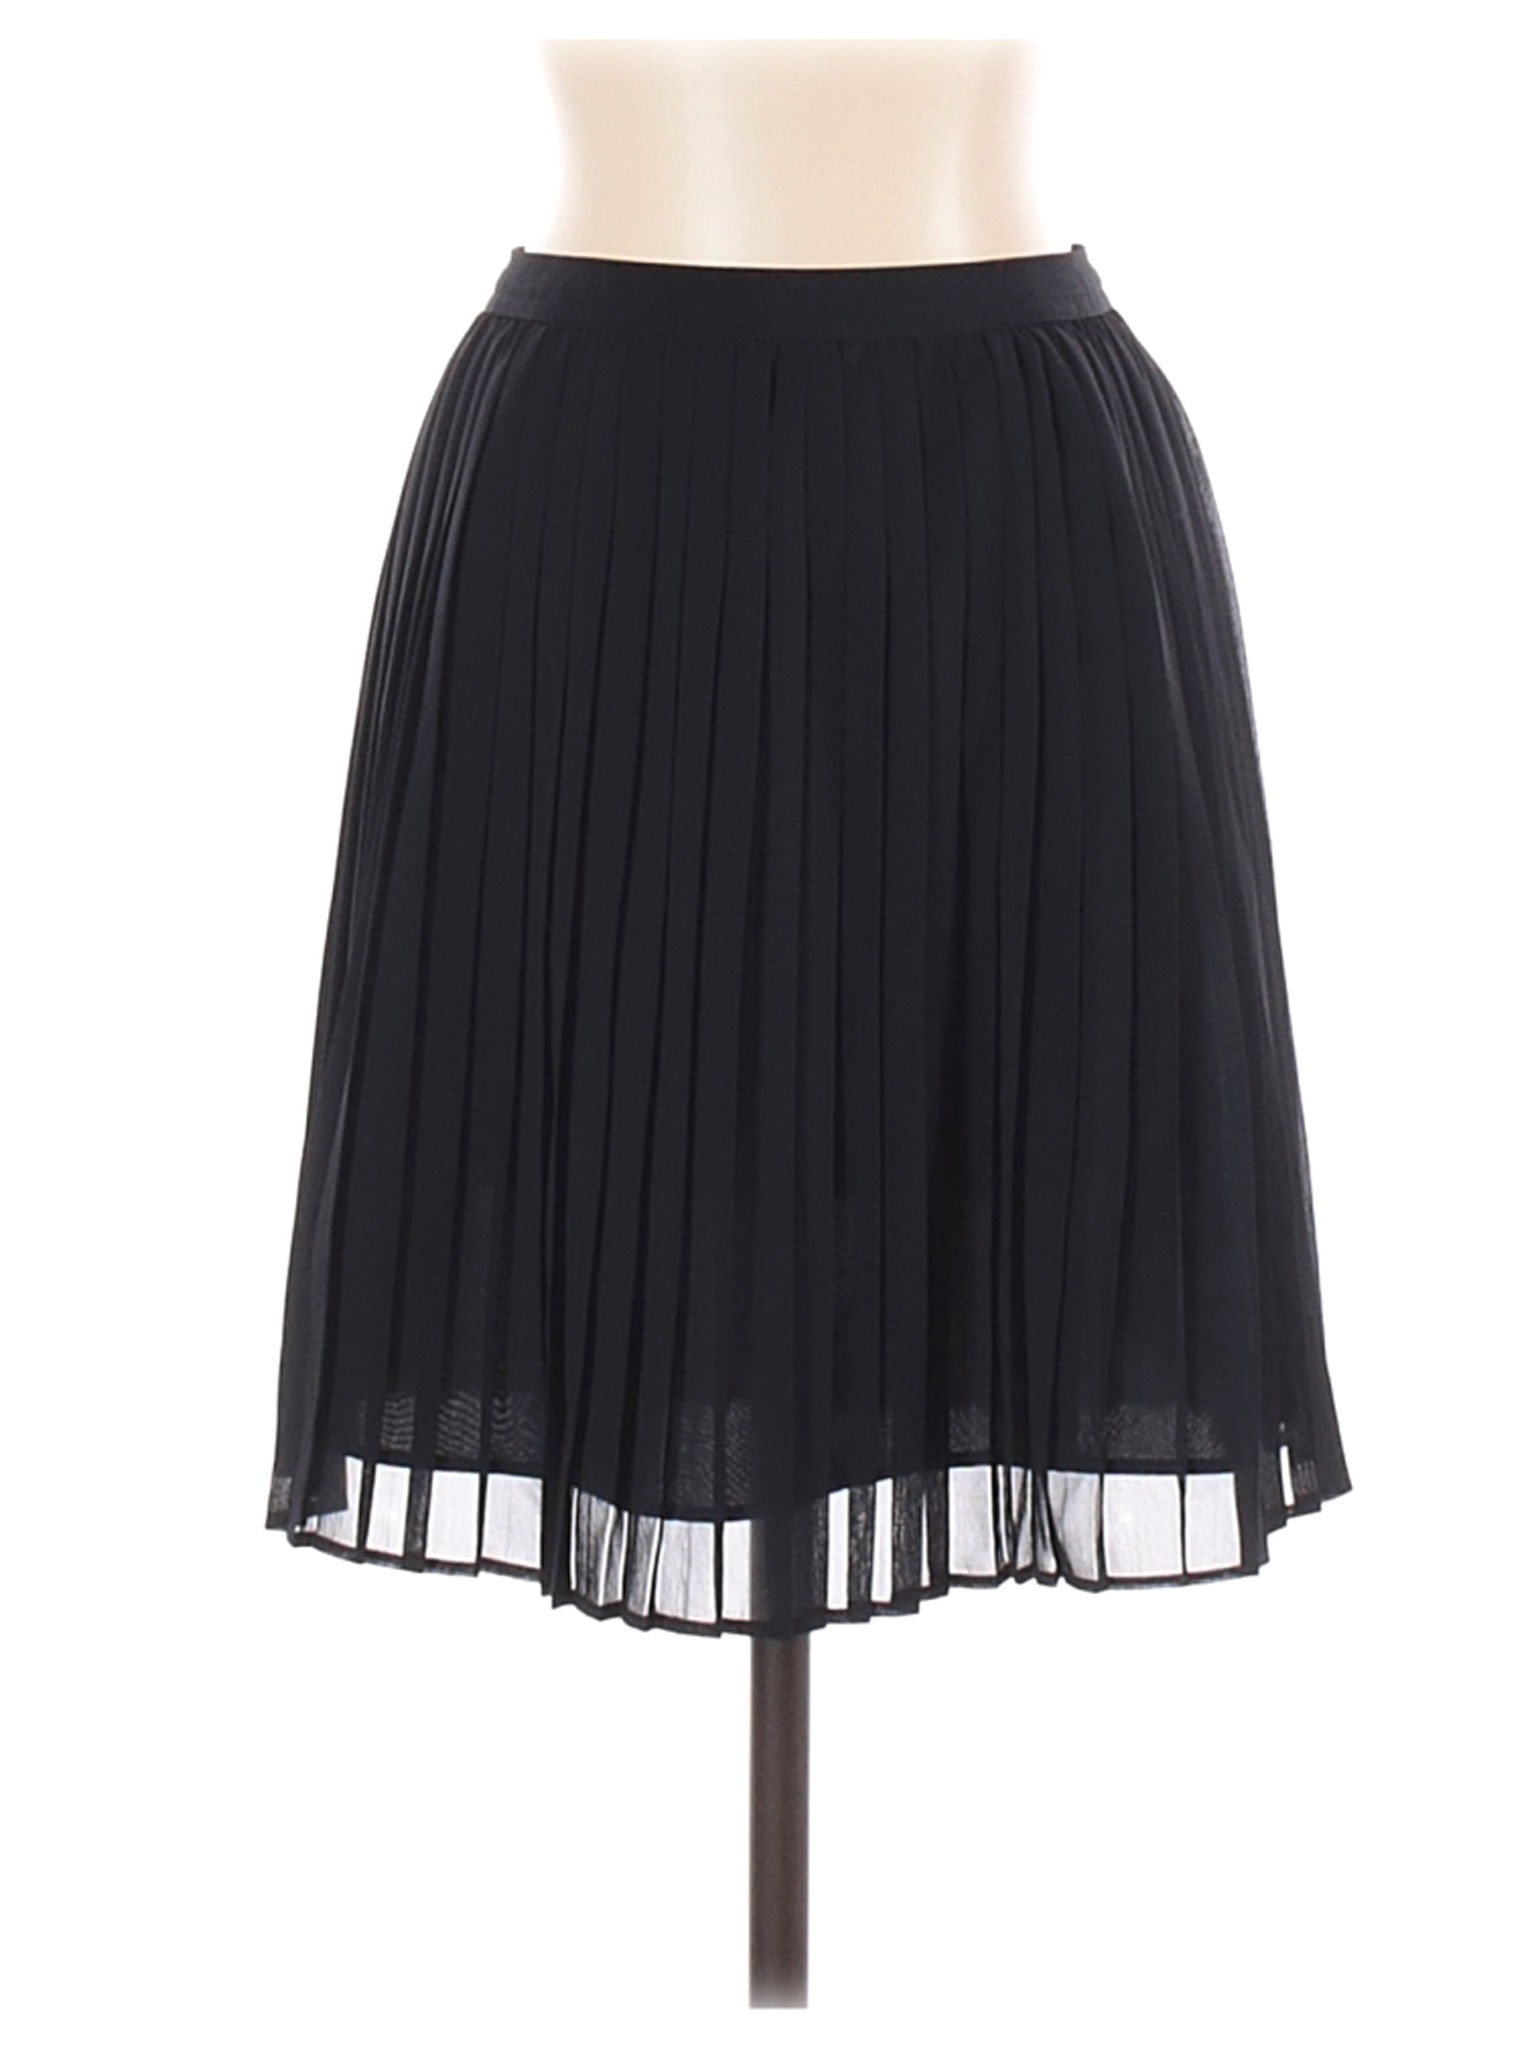 Uniqlo Women Black Casual Skirt XS | eBay